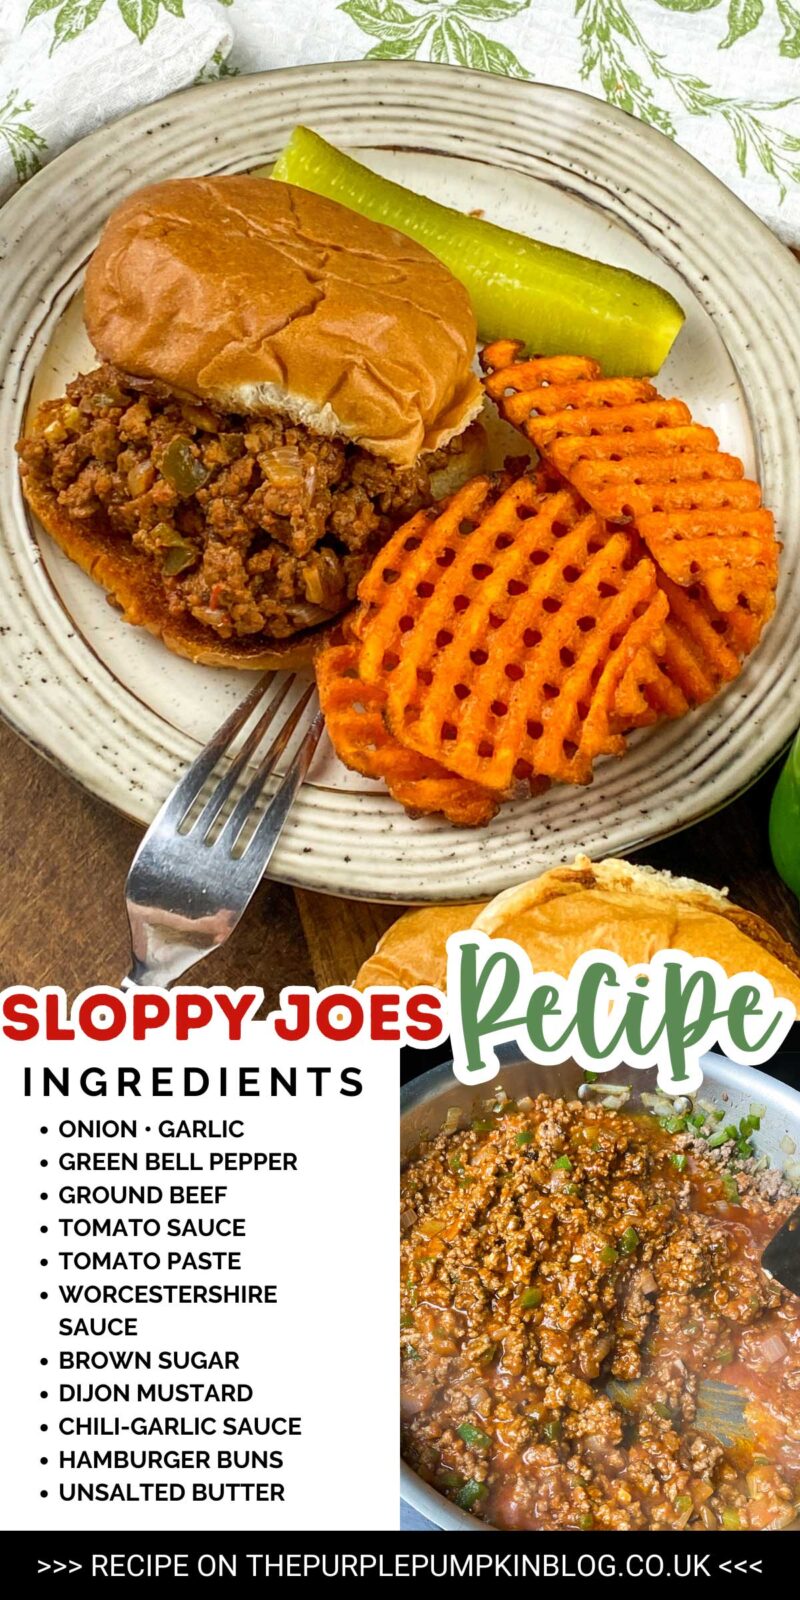 Ingredients for Sloppy Joes Recipe